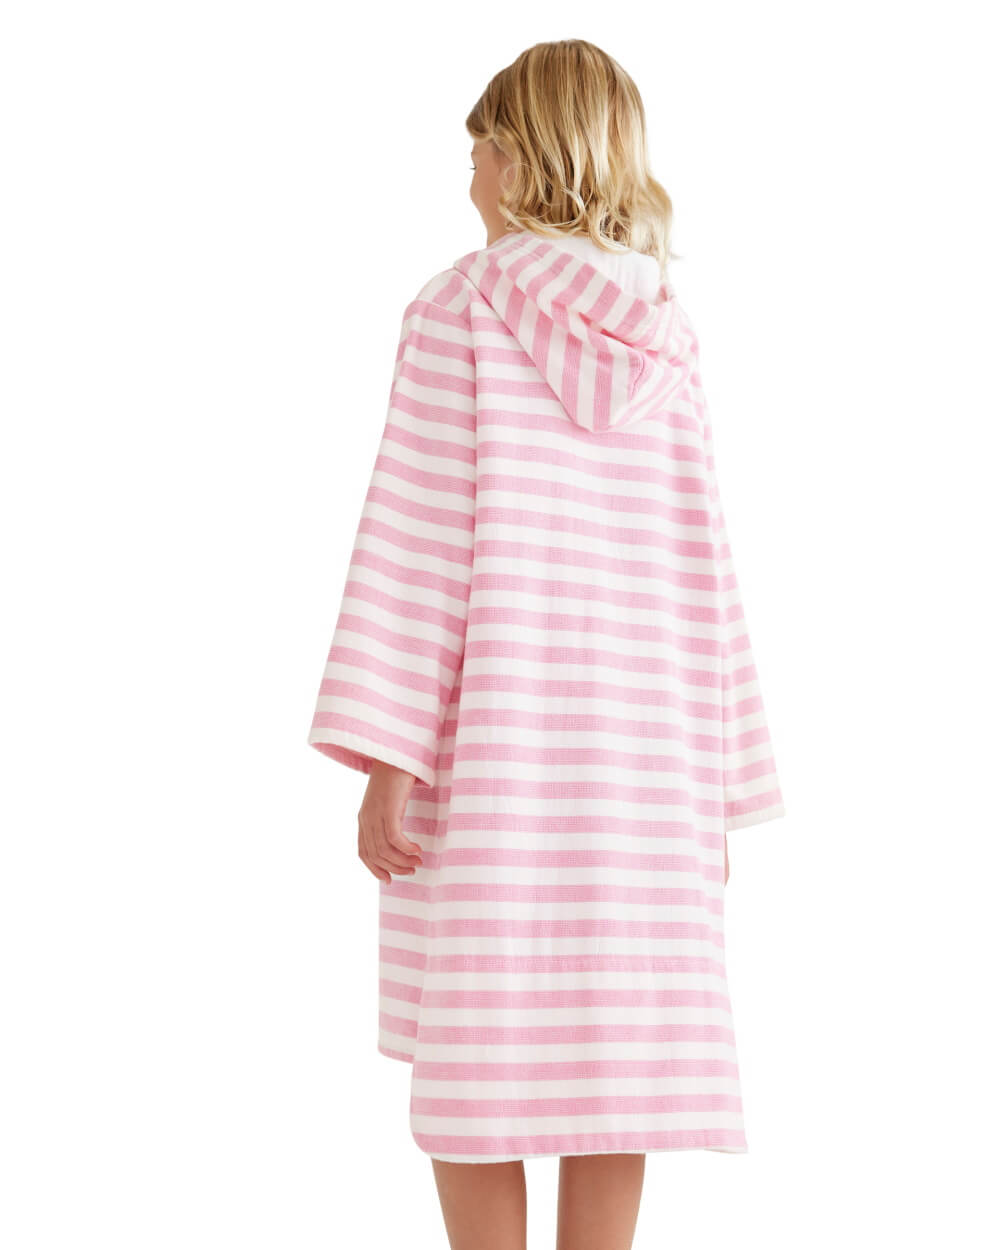 MENORCA Kids Terry Hooded Towel: Pink/White